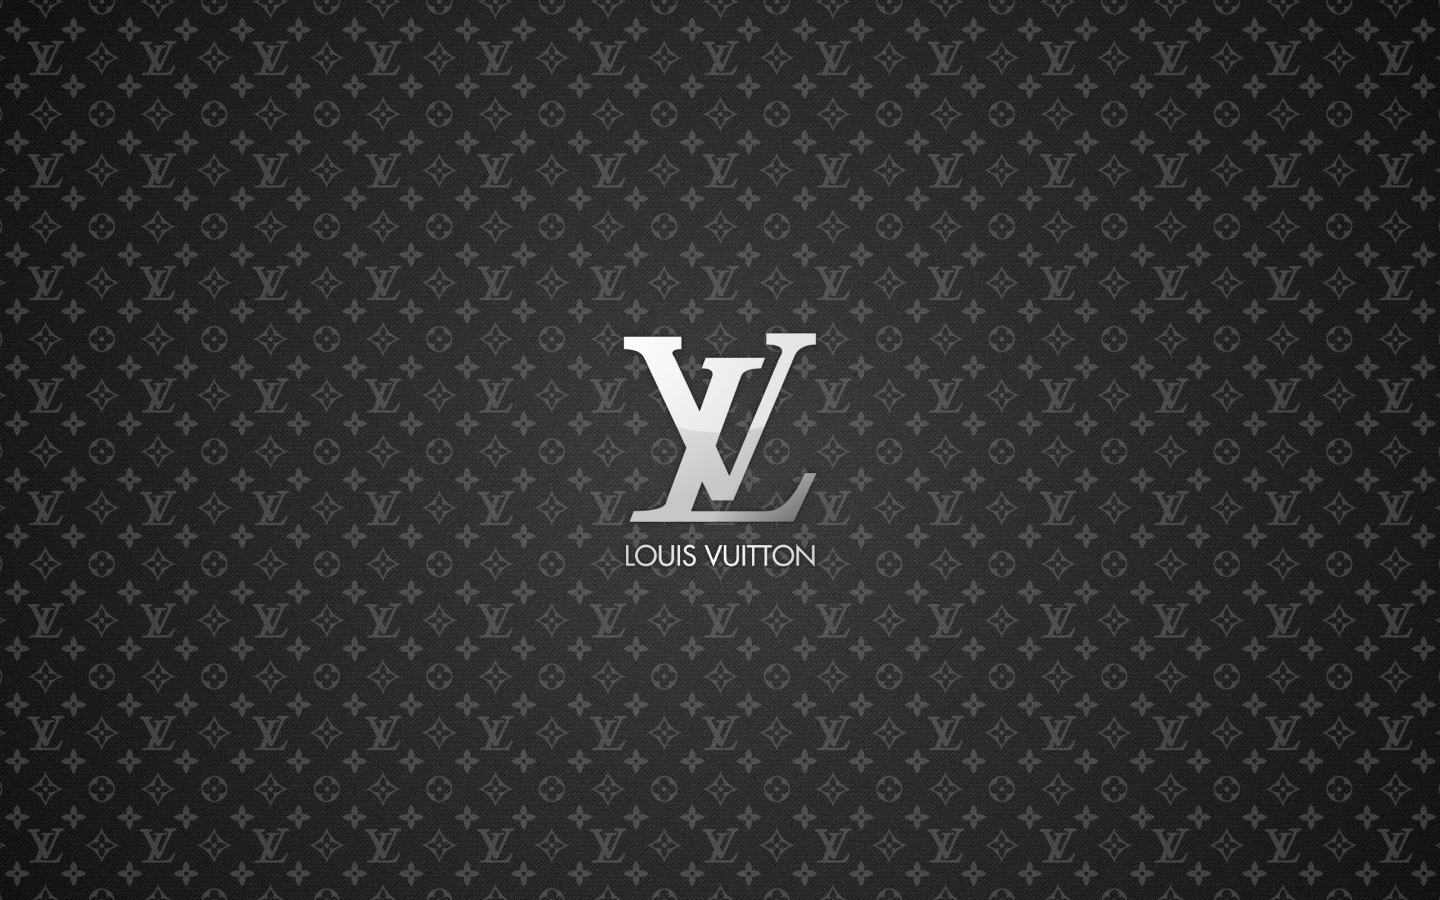 Louis Vuitton for 1440 x 900 widescreen resolution